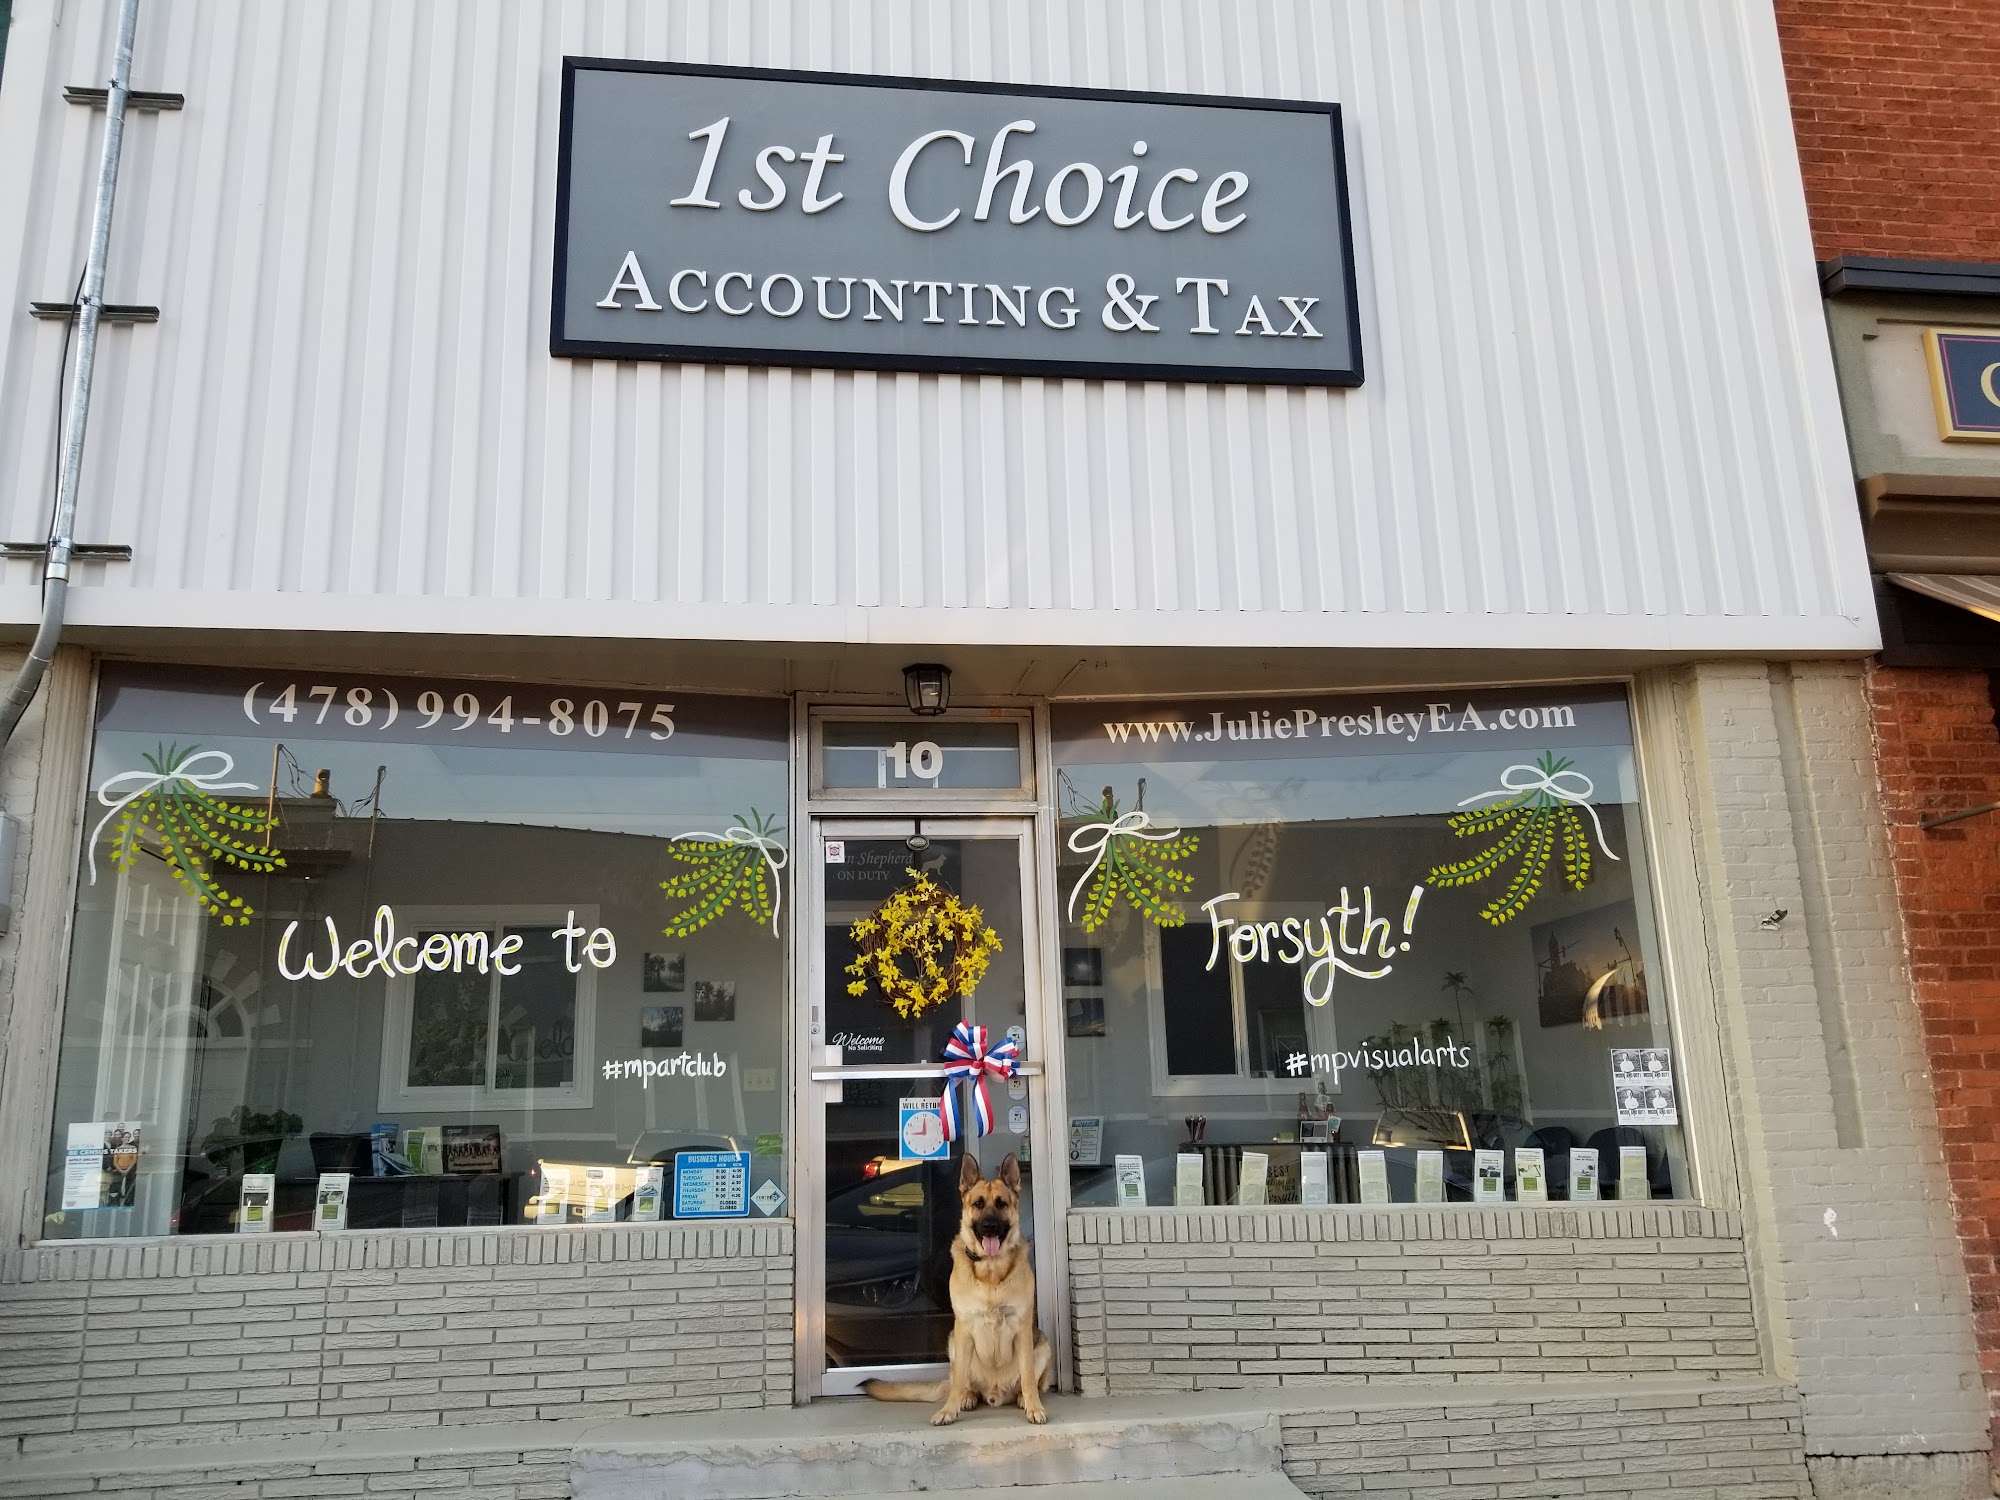 1st Choice Accounting & Tax, LLC 10 E Johnston St, Forsyth Georgia 31029